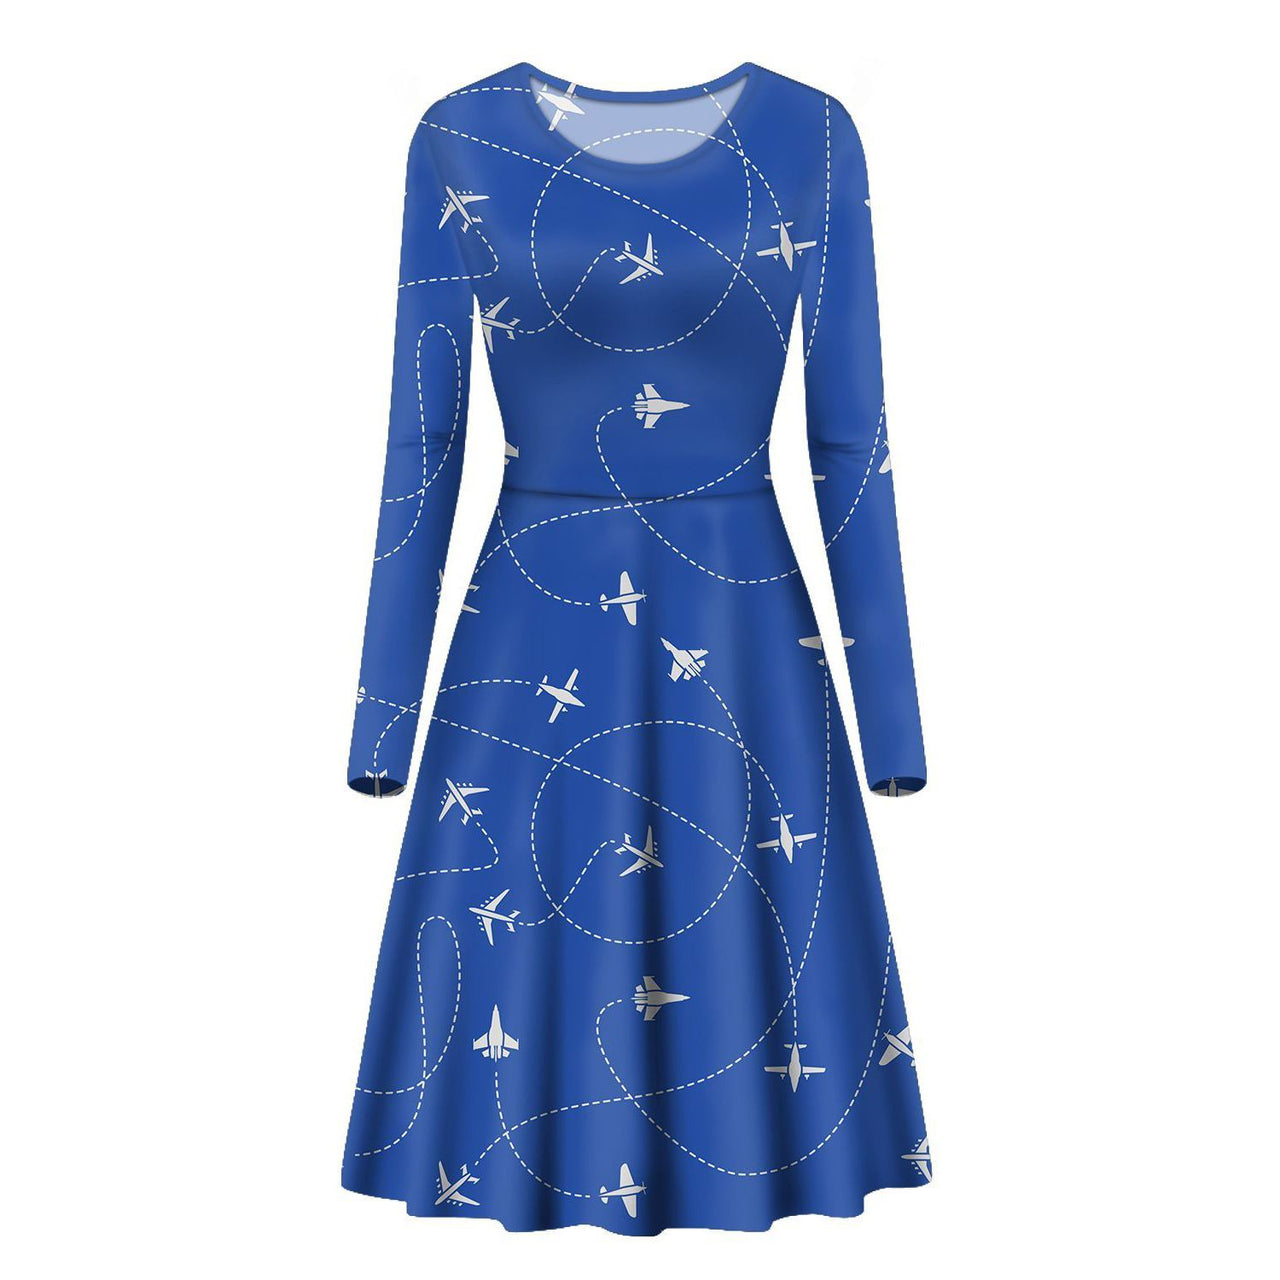 Travel The World By Plane (Blue) Designed Long Sleeve Women Midi Dress